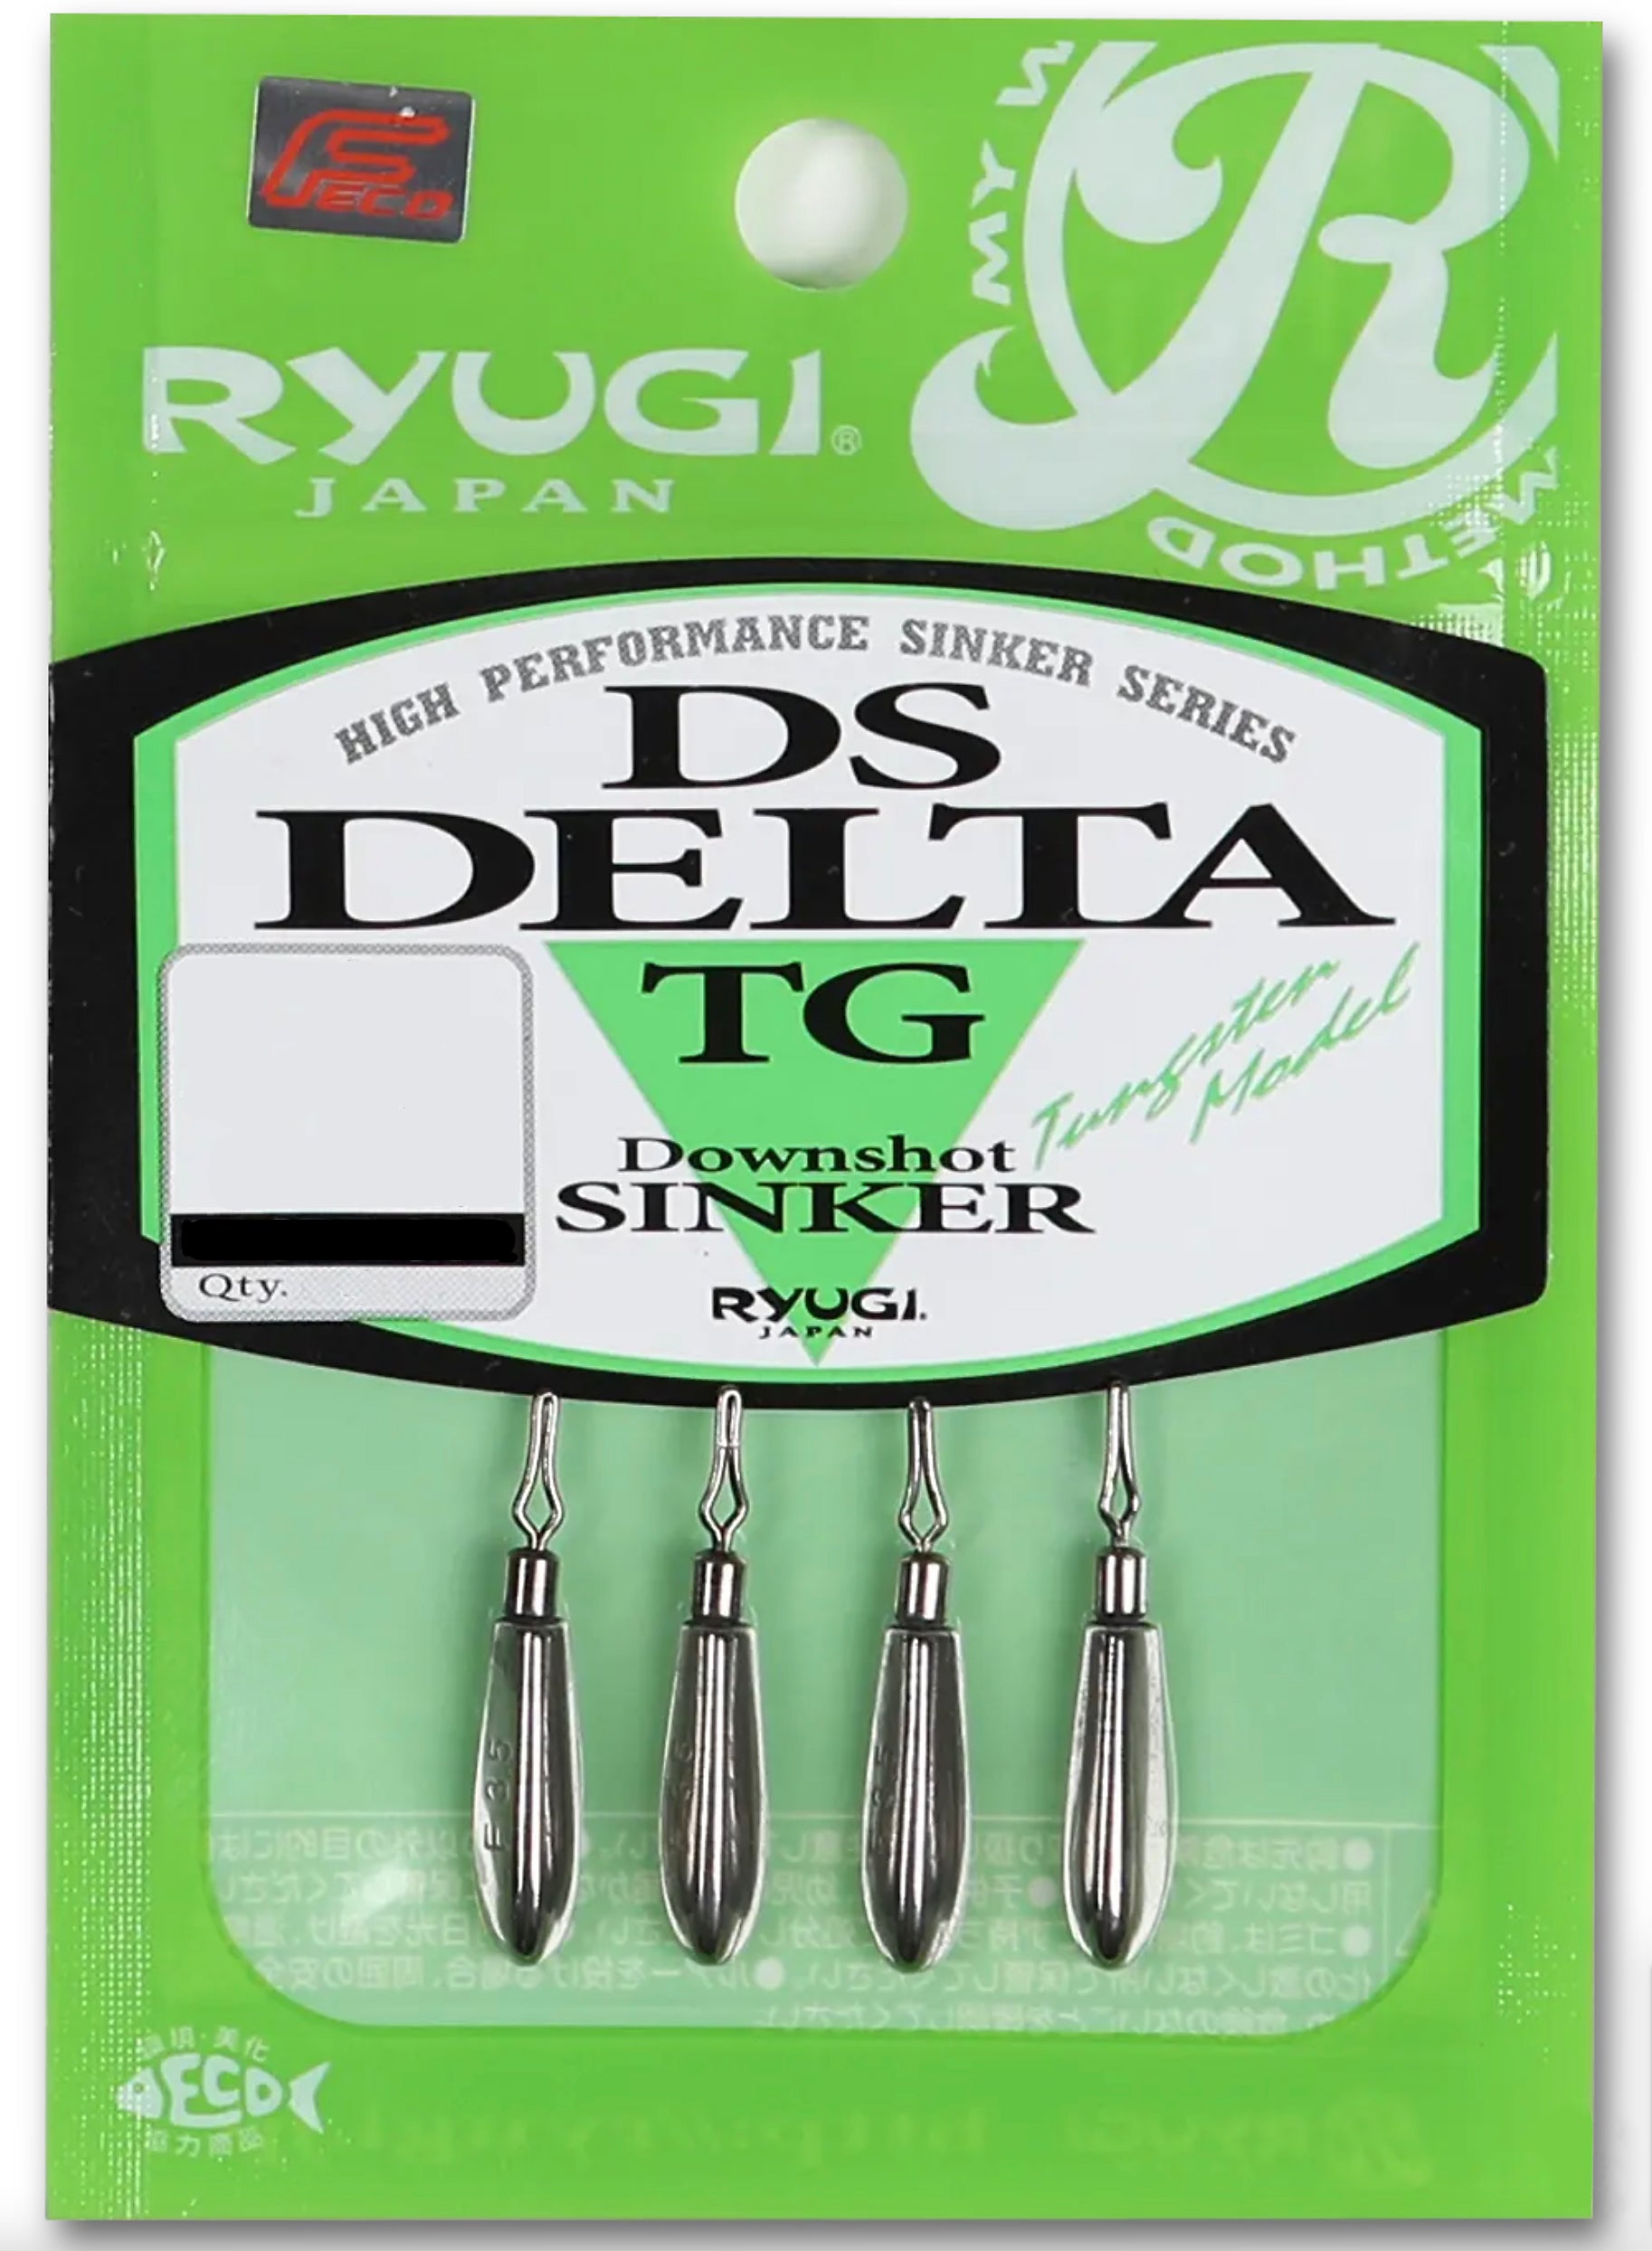 Ryugi DS Delta TG